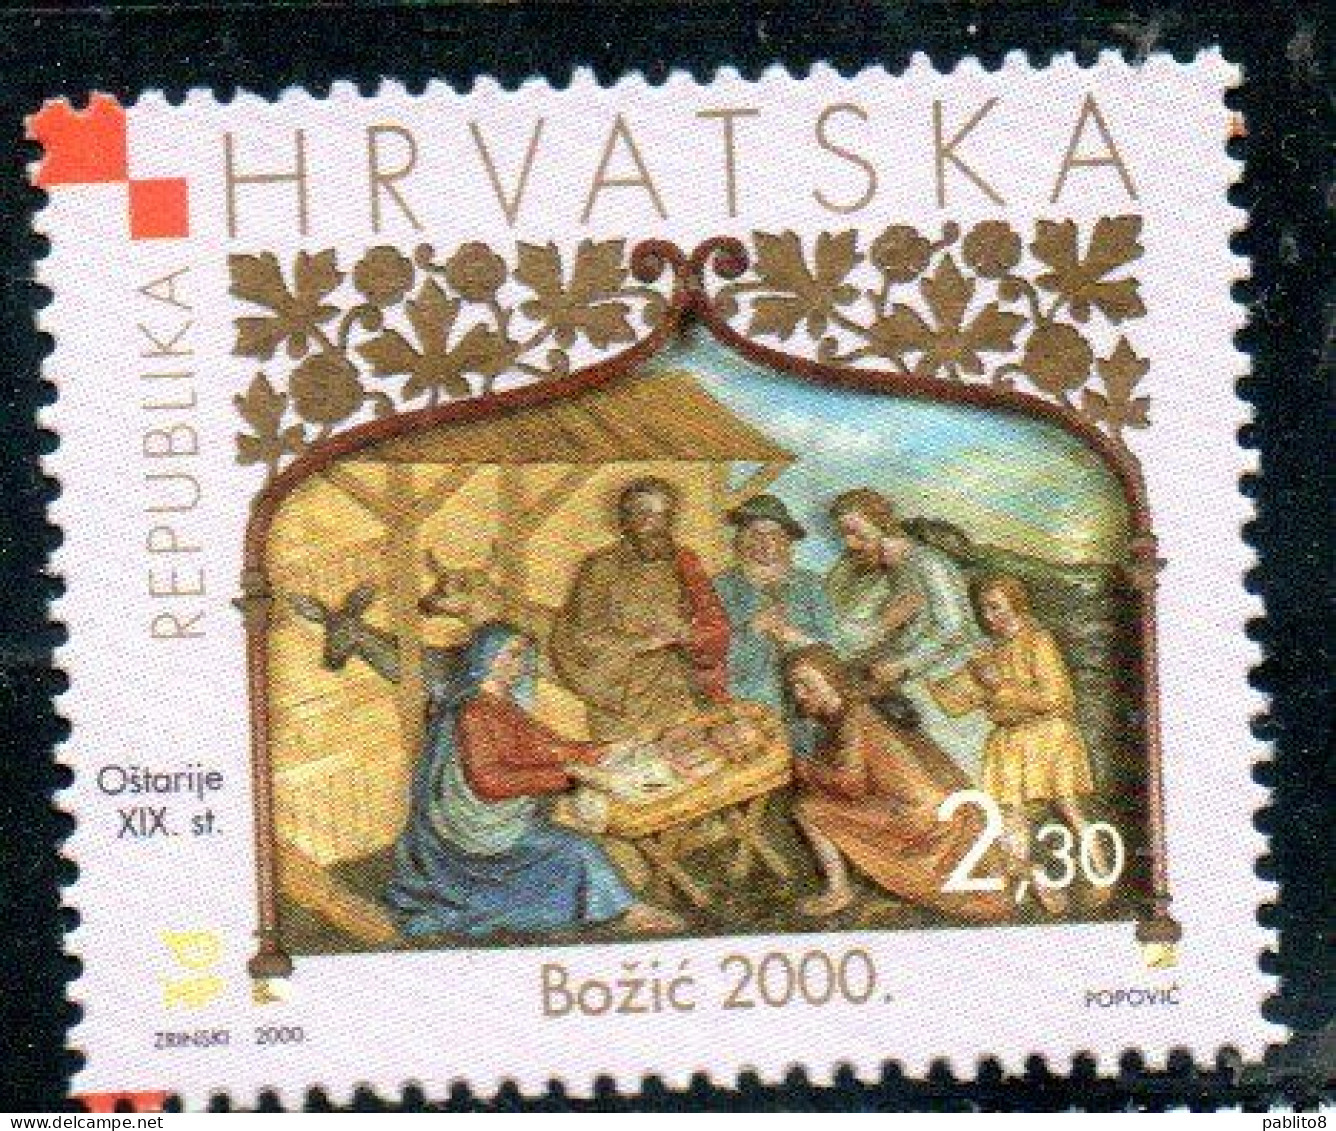 HRVATSKA CROATIA CROAZIA 2000 CHRISTMAS SRETAN BOZIC NATALE NOEL WEIHNACHTEN NAVIDAD 2.30k MNH - Croatia